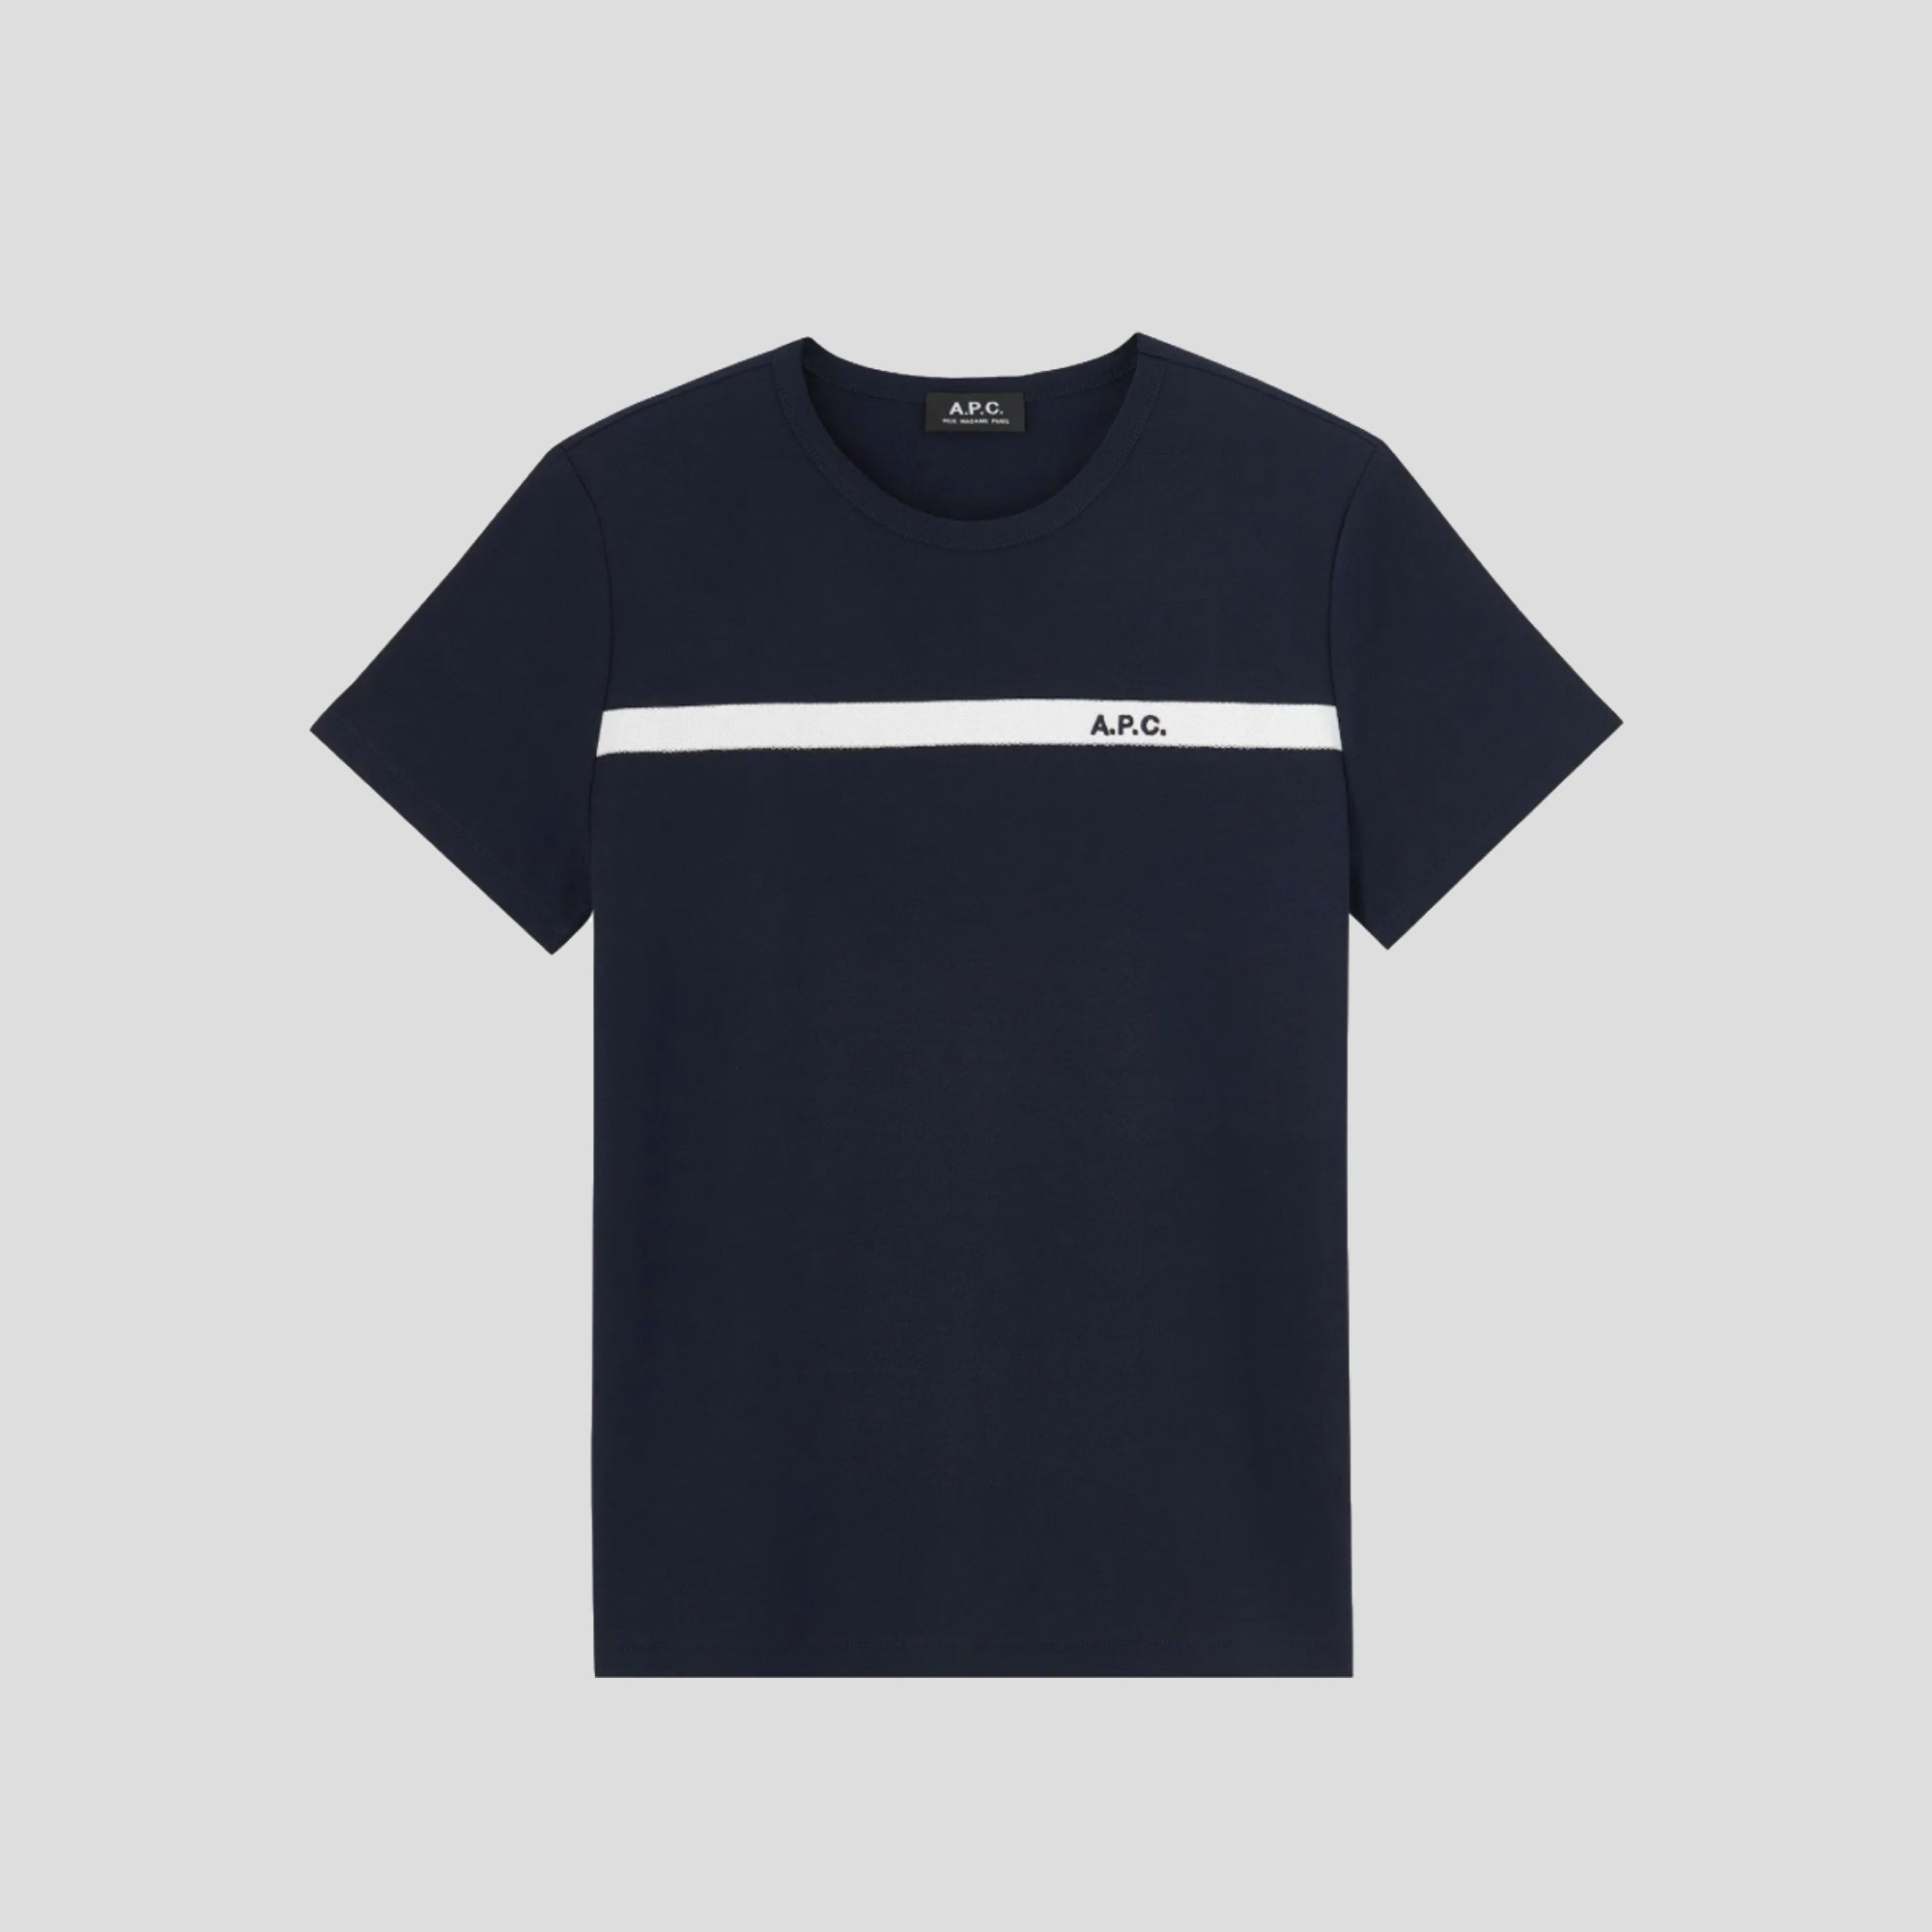 A.P.C.Tee shirt Yukata (navy)